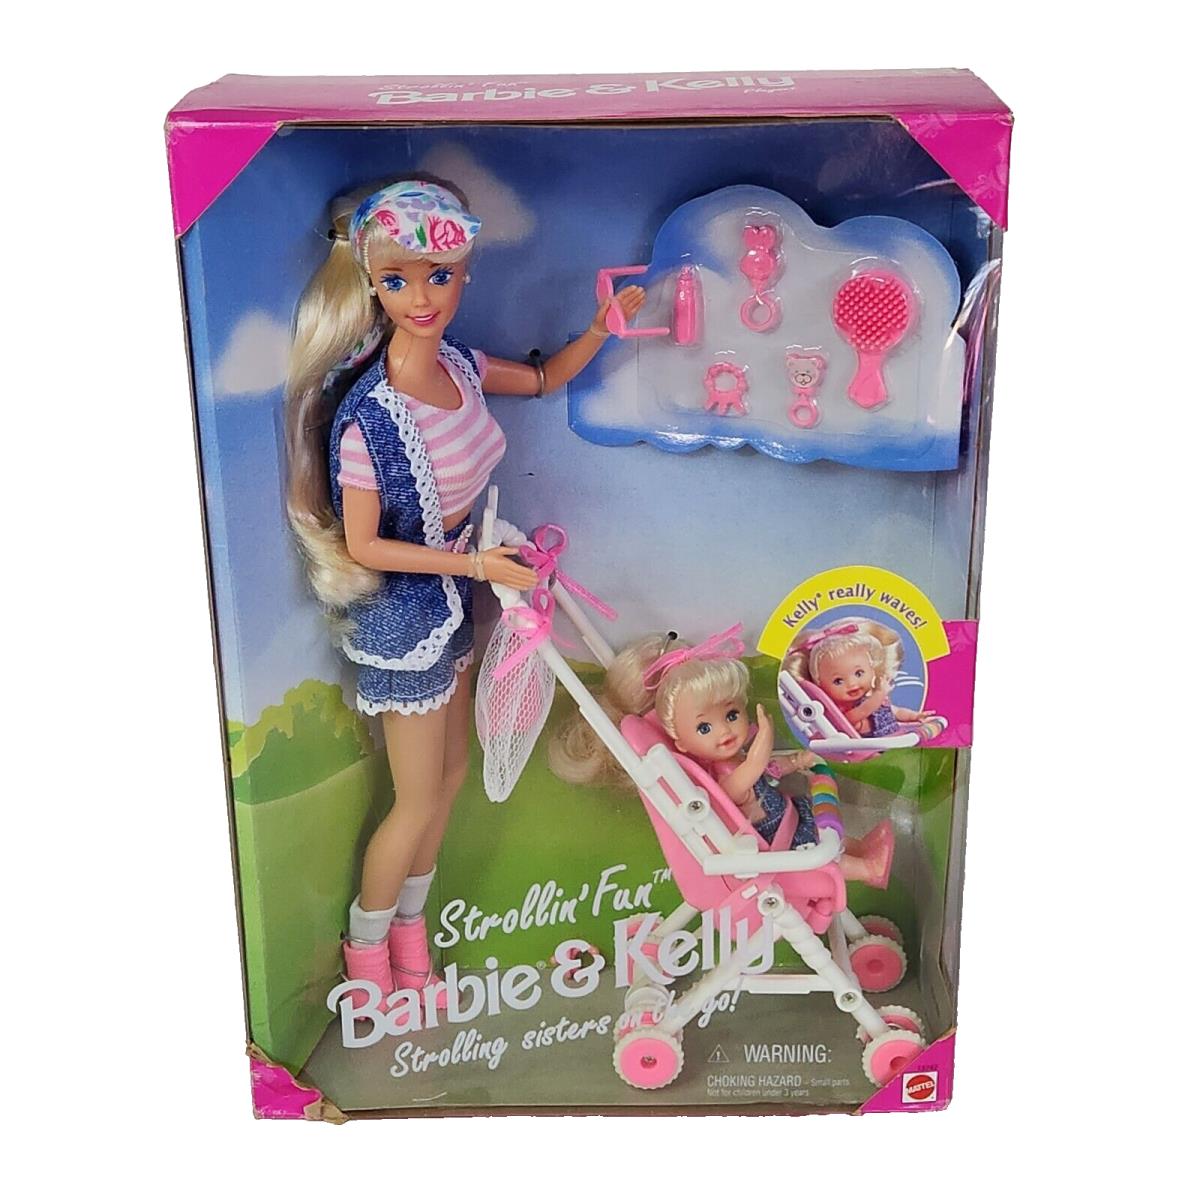 Vintage 1995 Strollin Fun Barbie + Kelly Doll Box Mattel 13742